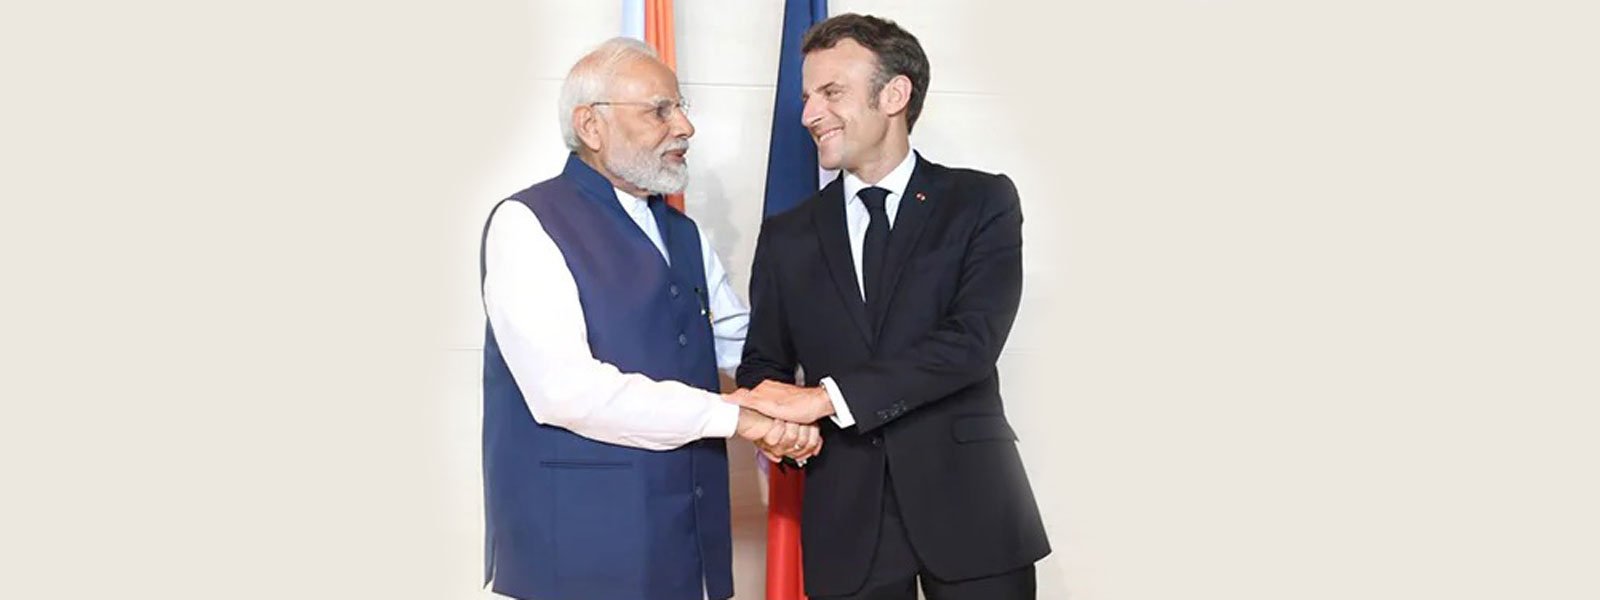 Prime Minister Shri Narendra Modi met President of France, Emmanuel Macron at G20 summit in Bali where India officially takes in G20 Presidency